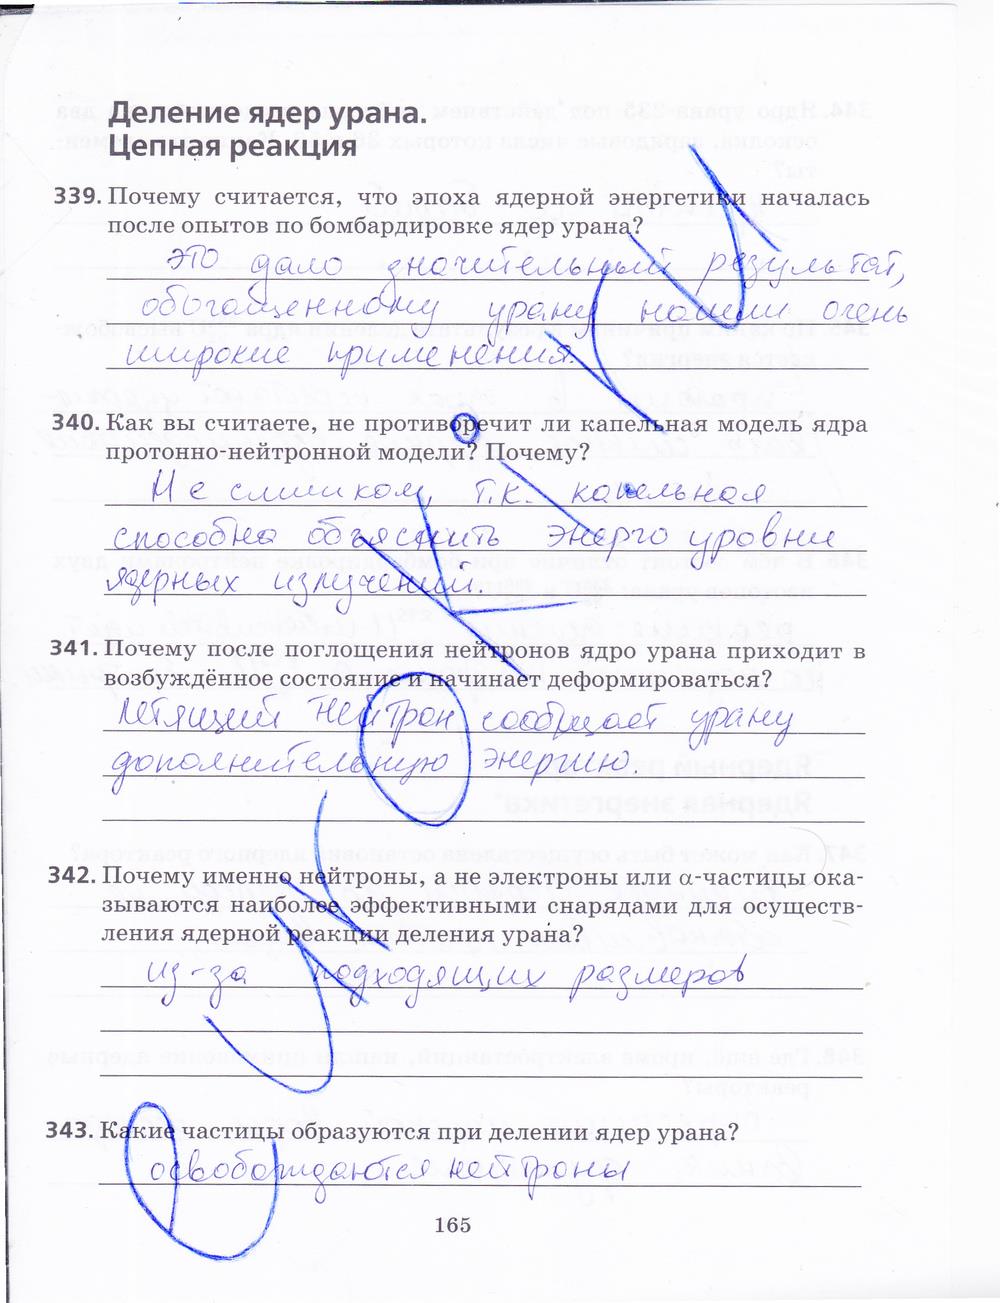 гдз 9 класс рабочая тетрадь страница 165 физика Пурышева, Важеевская, Чаругин